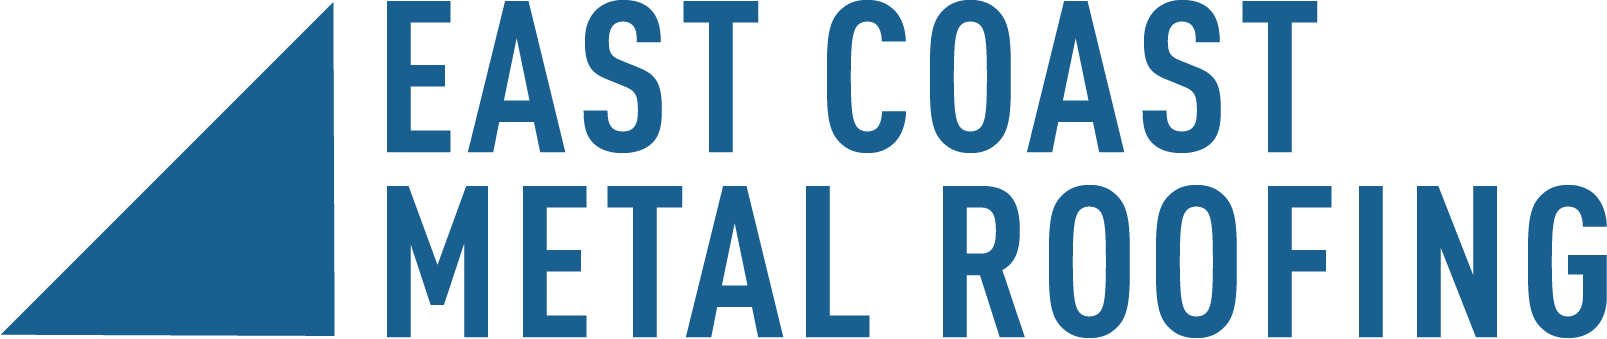 East Coast Metal Roofing, LLC - New Hampshire Logo